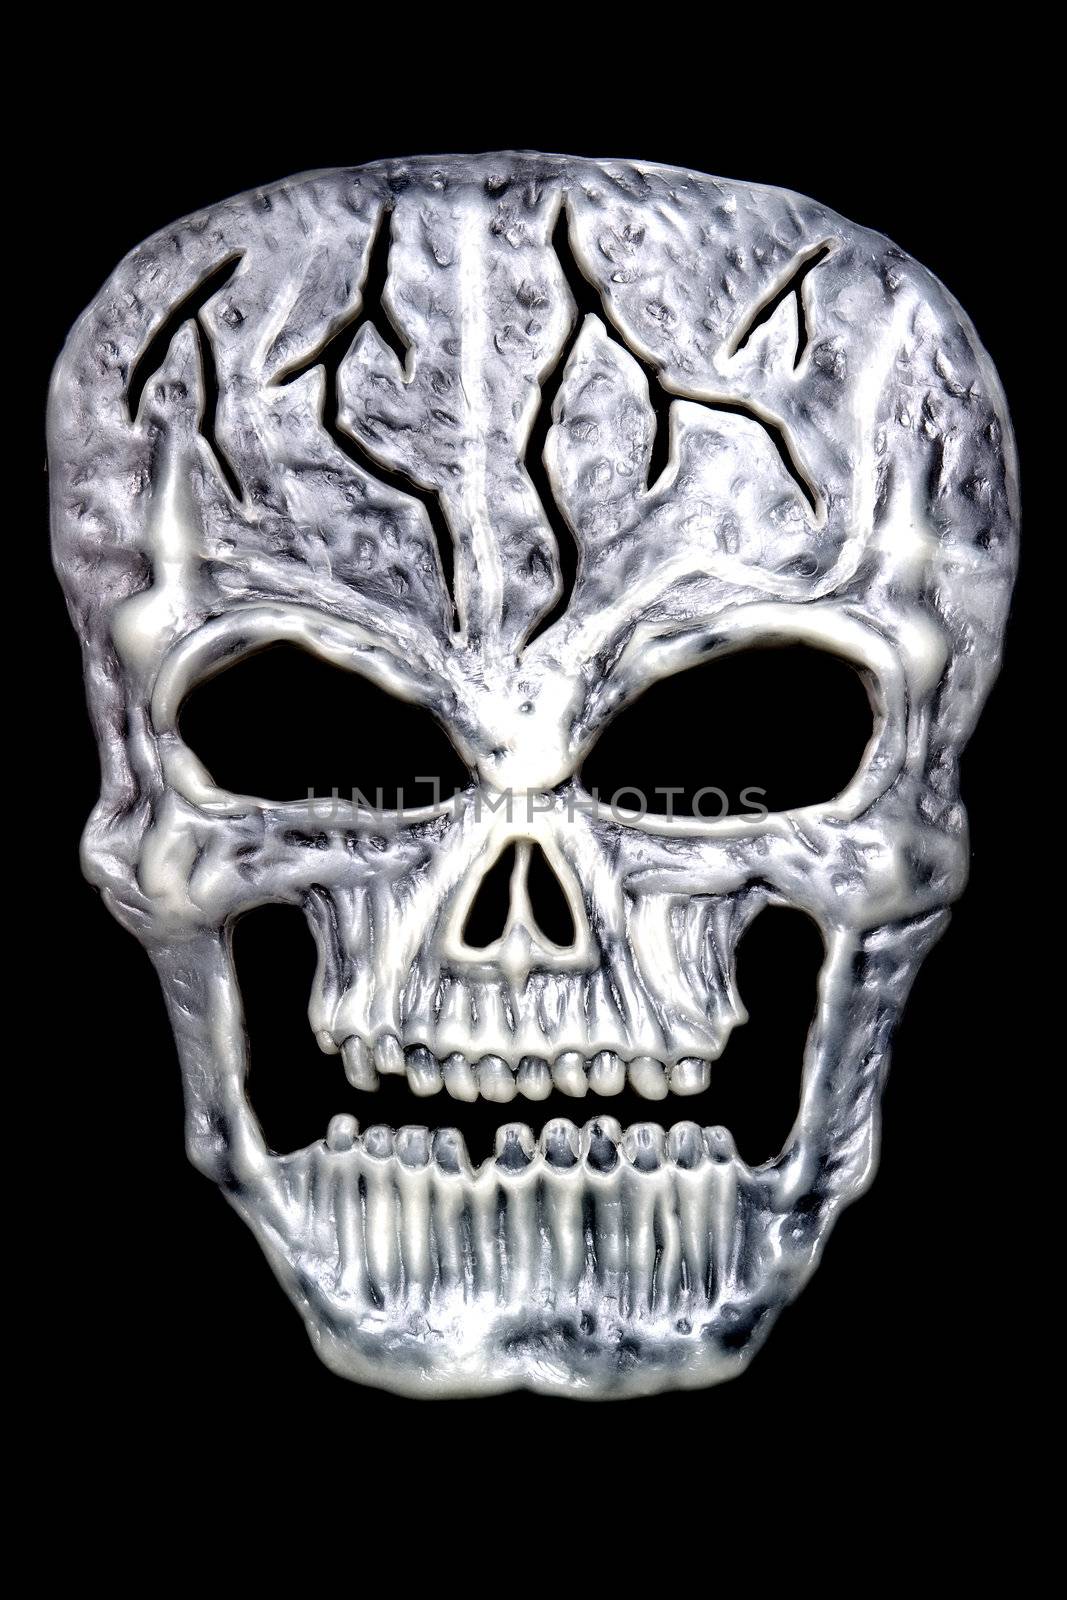 a plastic decoration skull for halloween